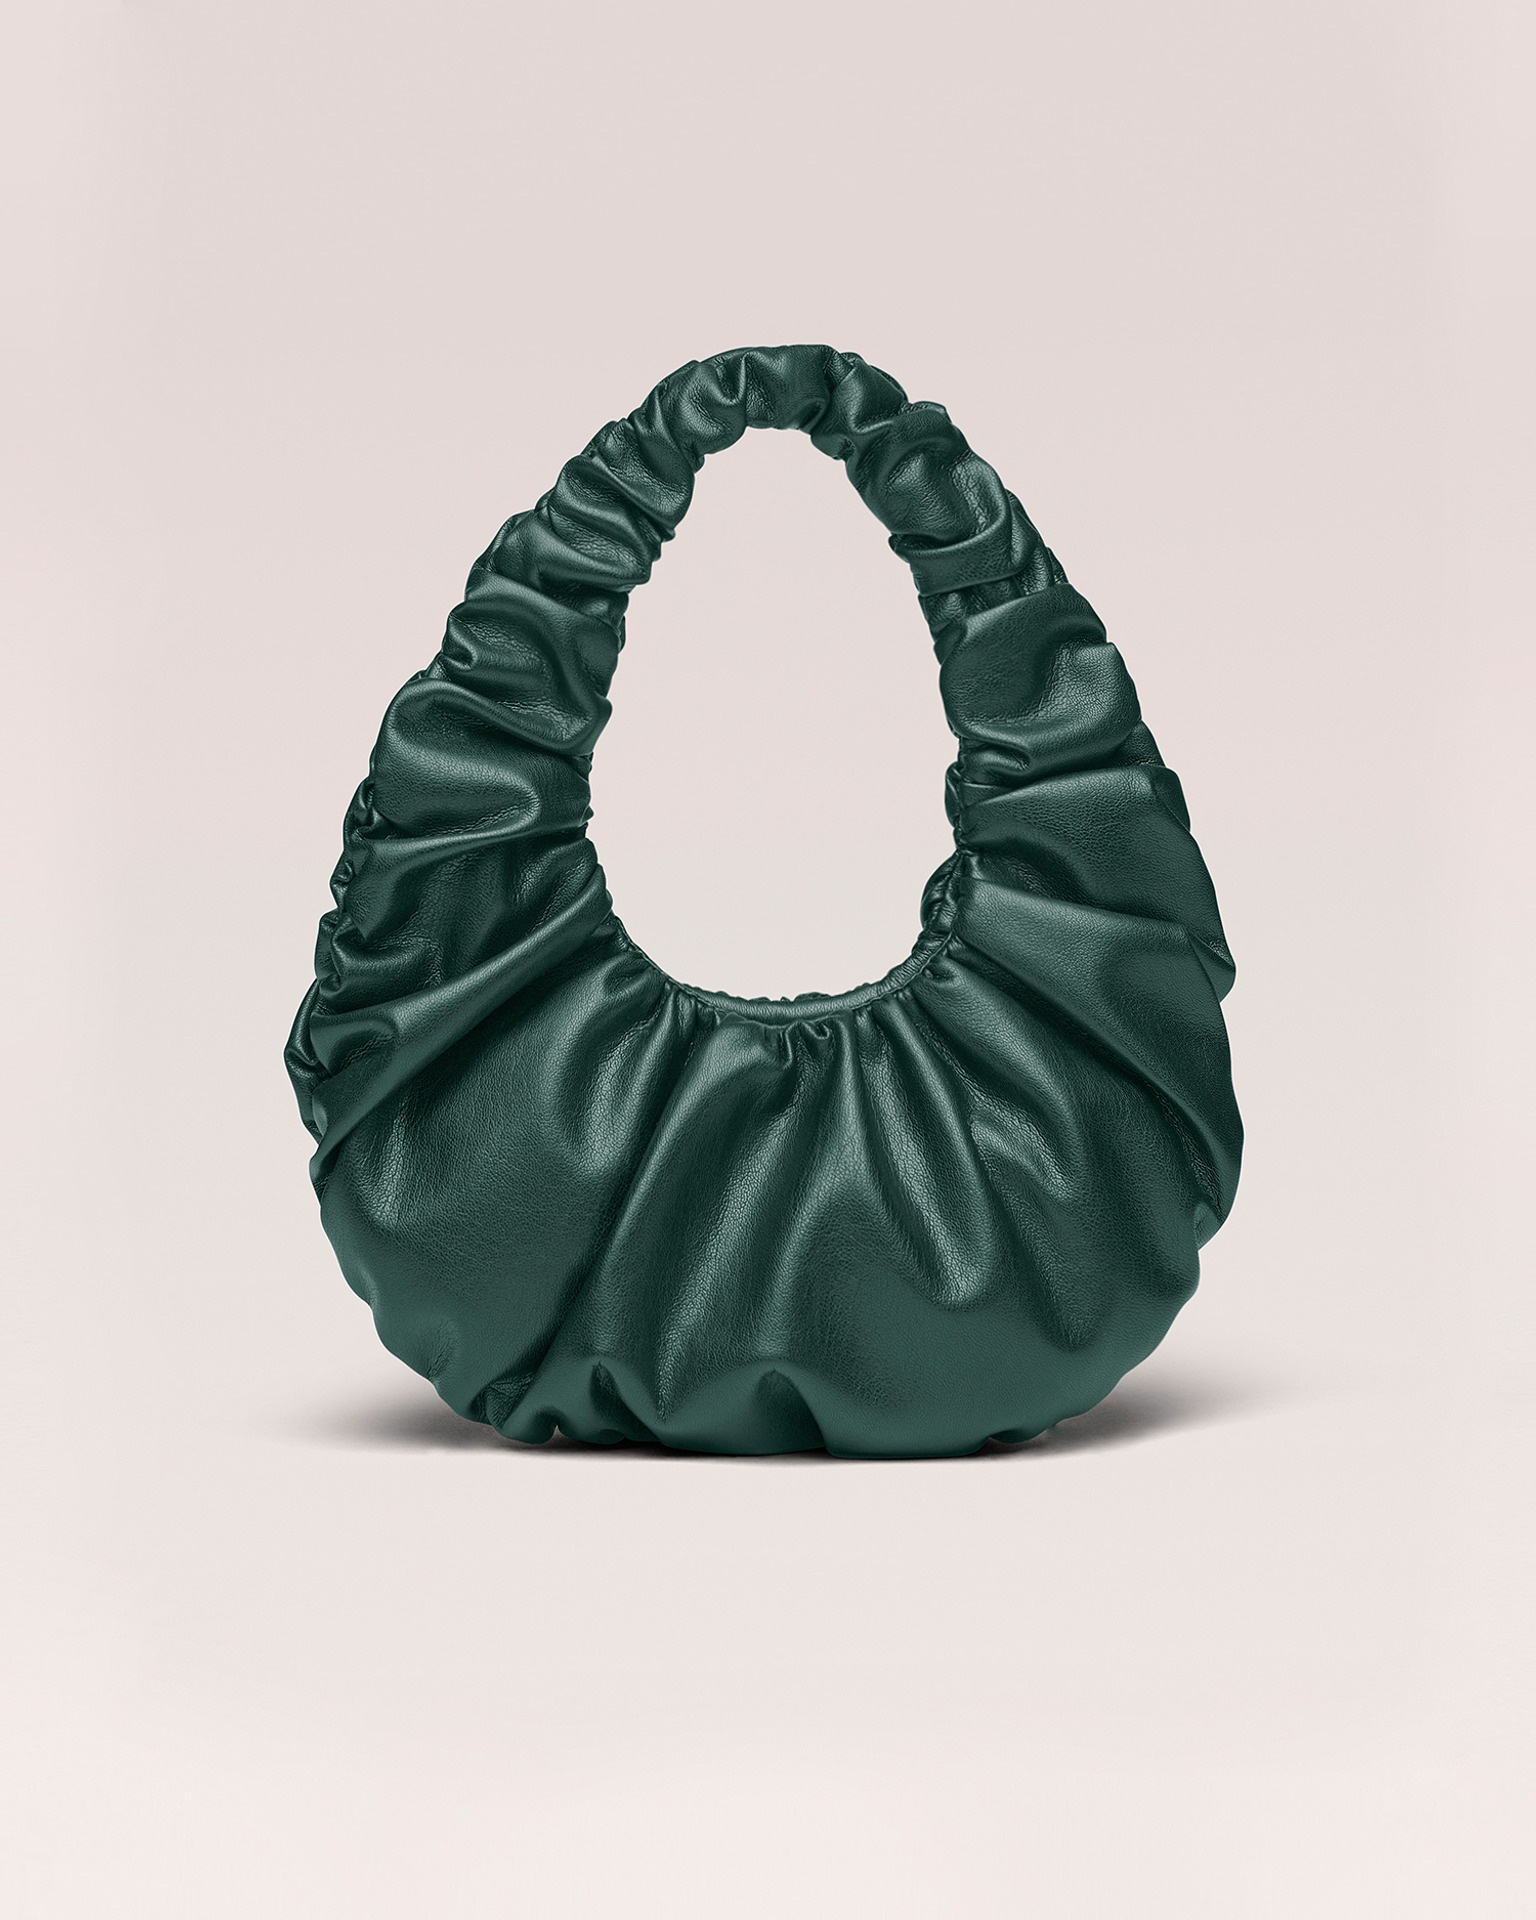 ANJA BAGUETTE - OKOBOR™ alt-leather gathered handbag - Pine green - 1